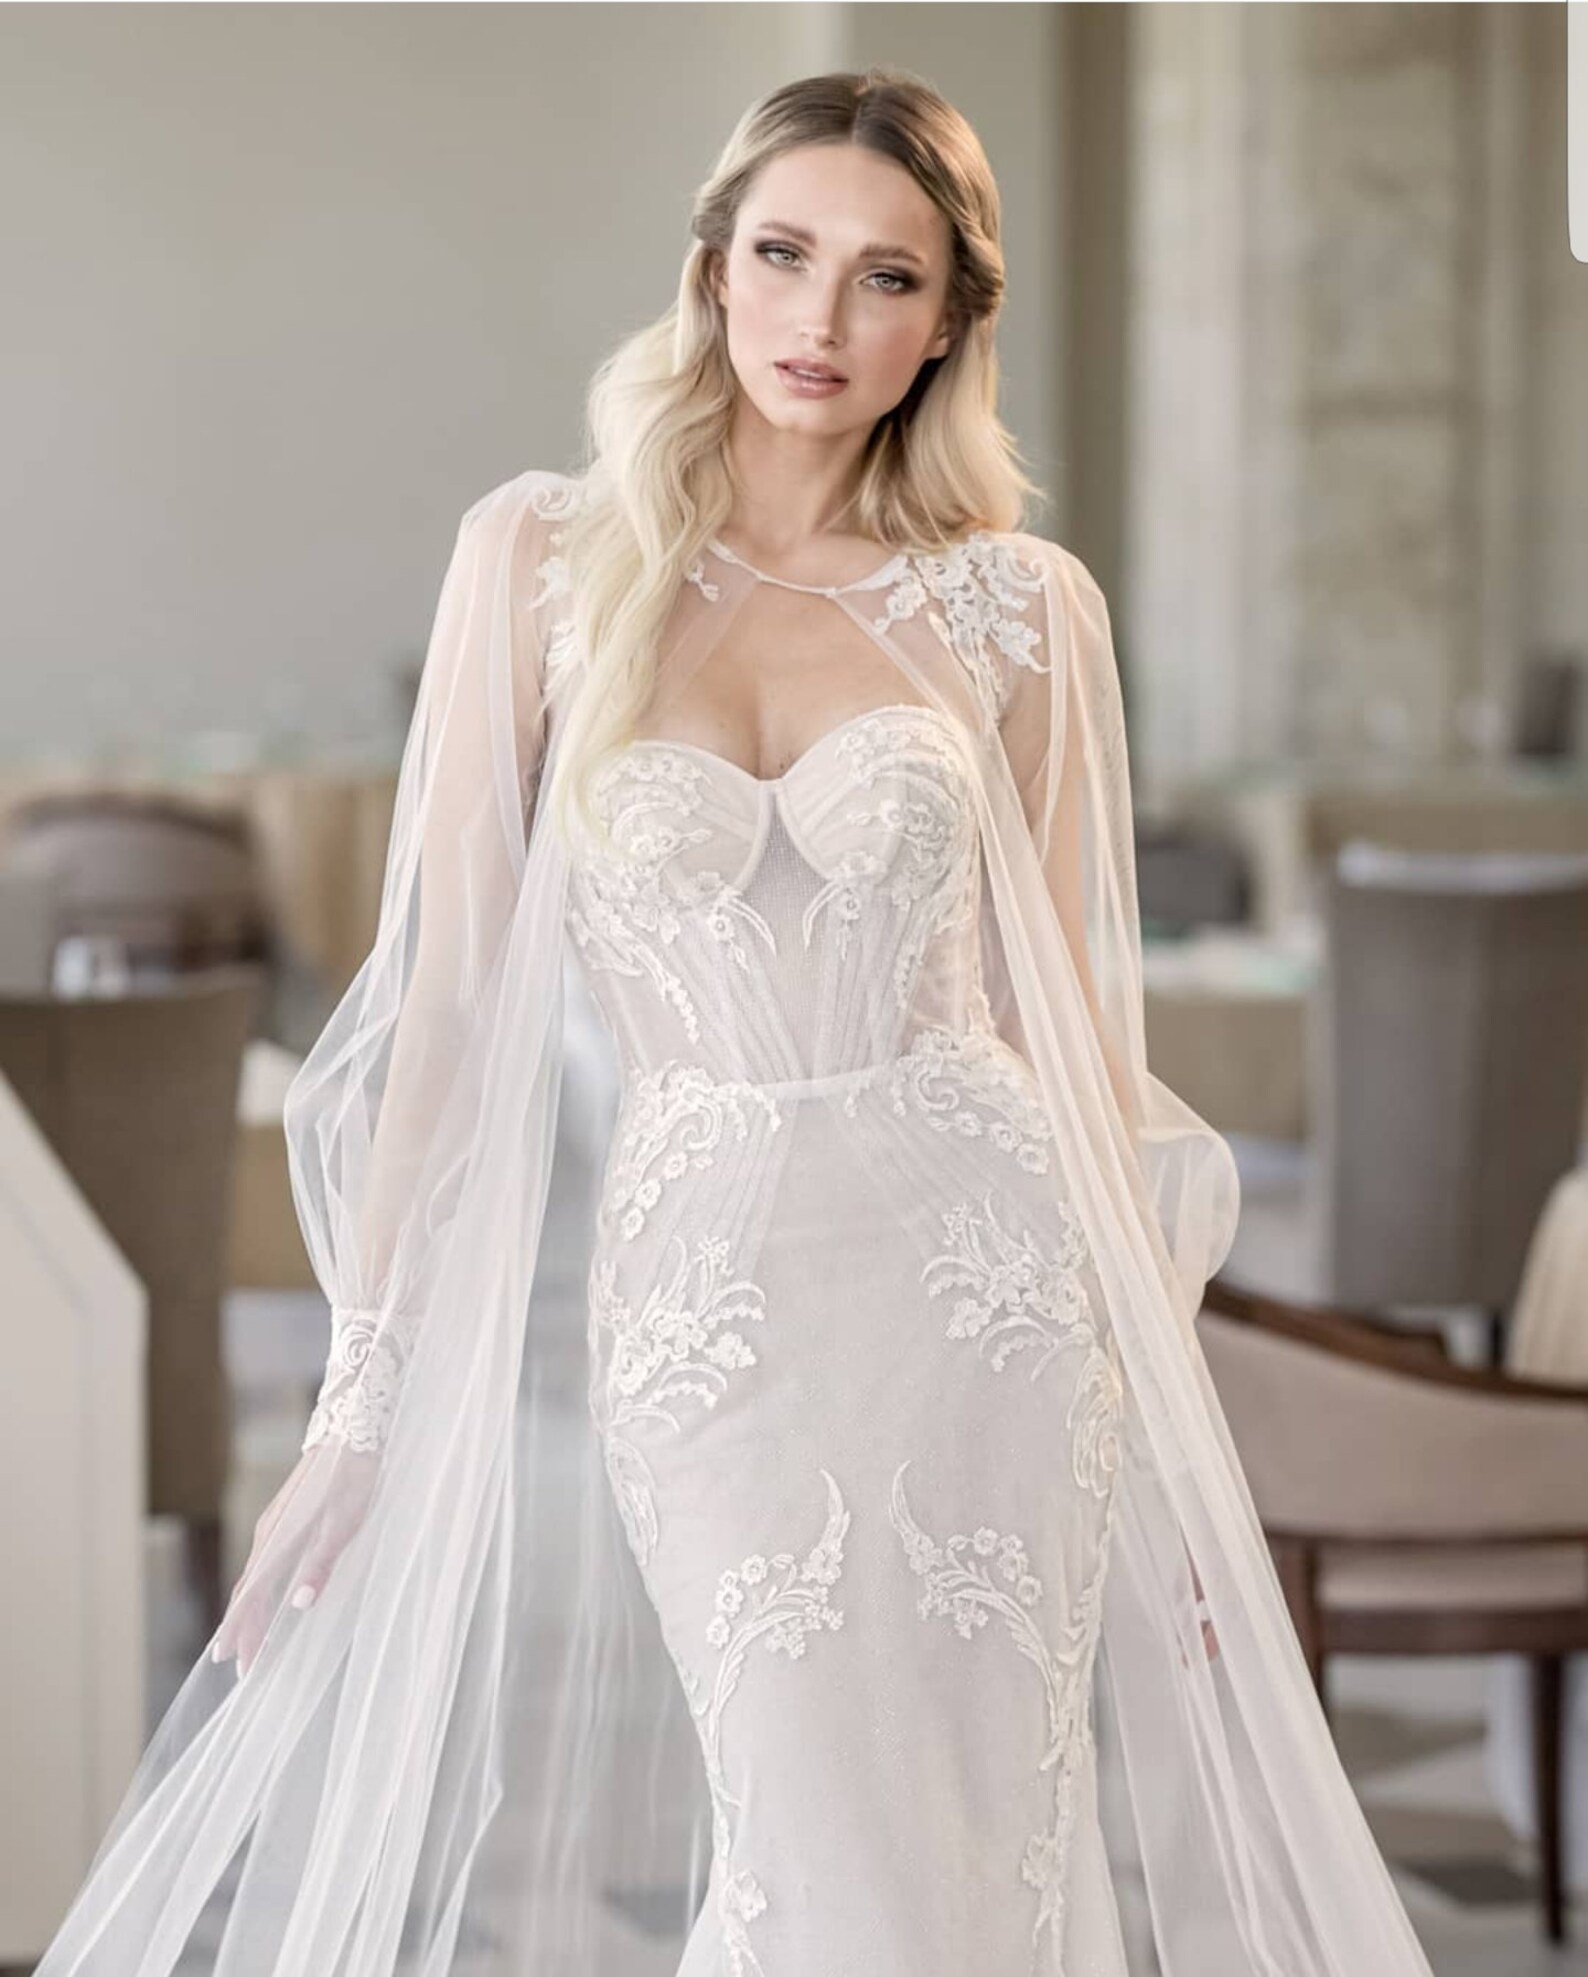 Long sleeve wedding cape elegant lace tulle cape veil | Etsy